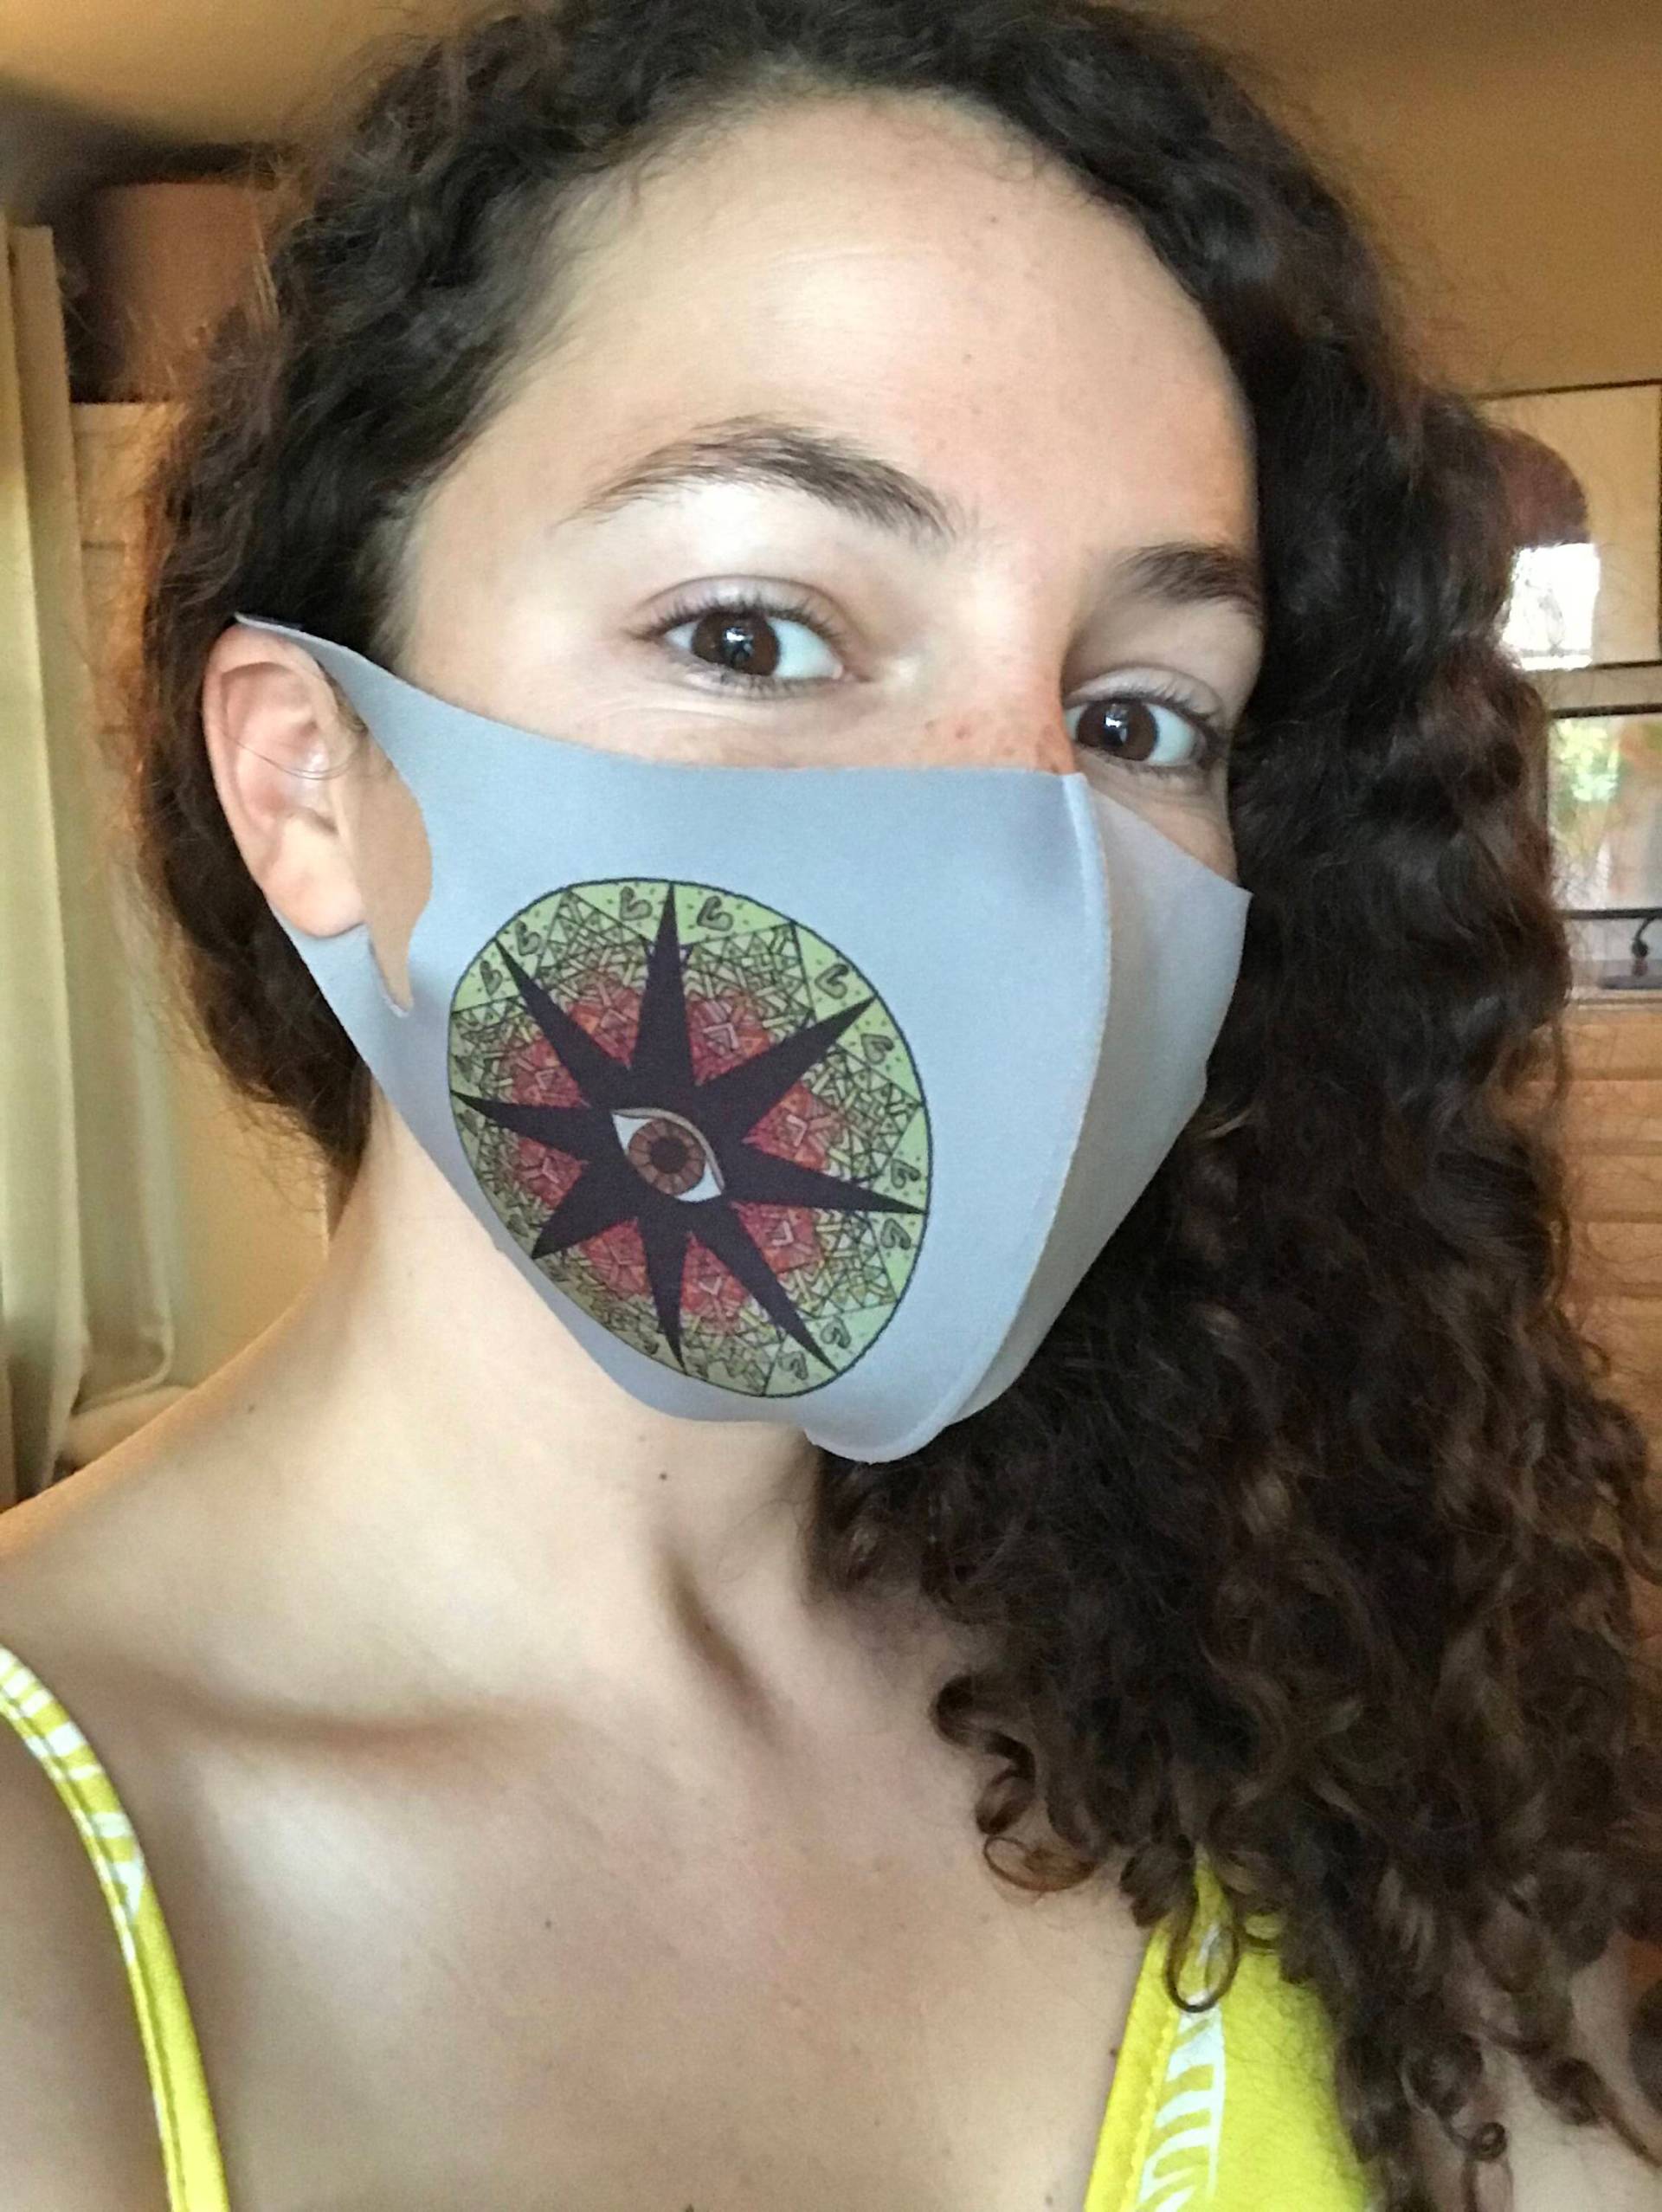 Empowermenting "Blm" Stoffmaske - Einzigartiges Mandala Design Auf Grau von mandalasofthepath